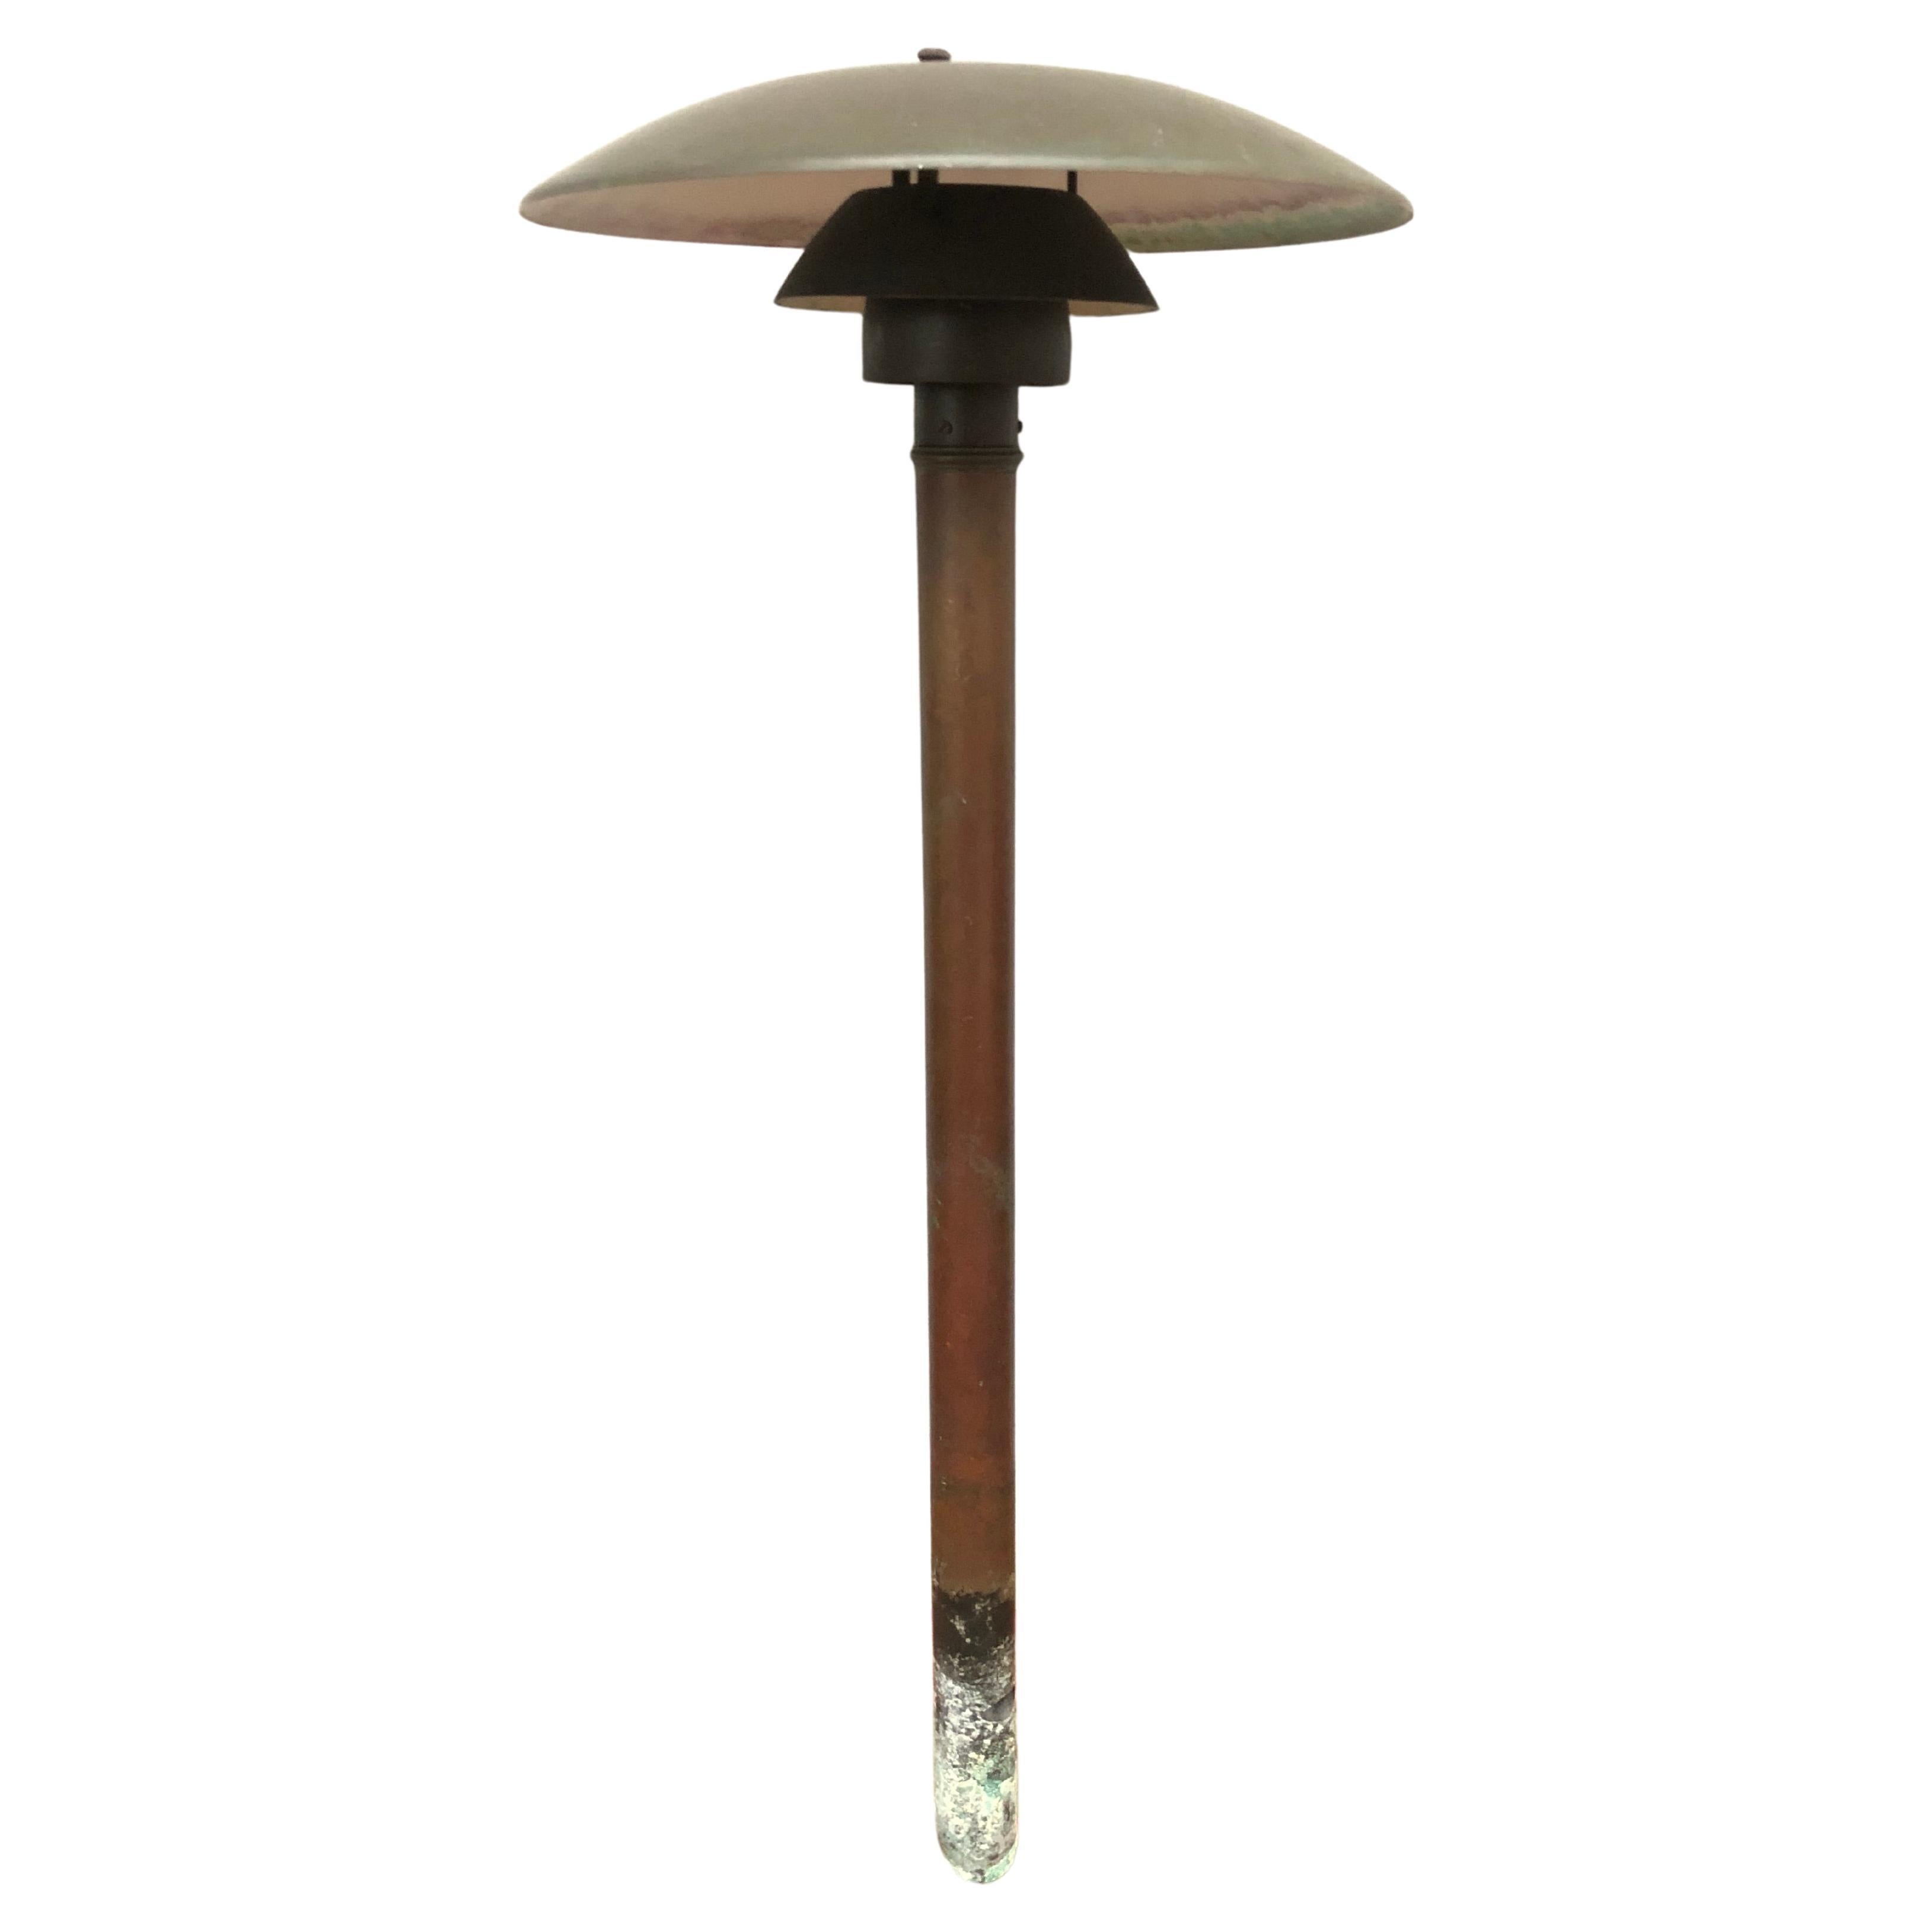 An Iconic Poul Henningsen  Garden Lamp by Louis Poulsen